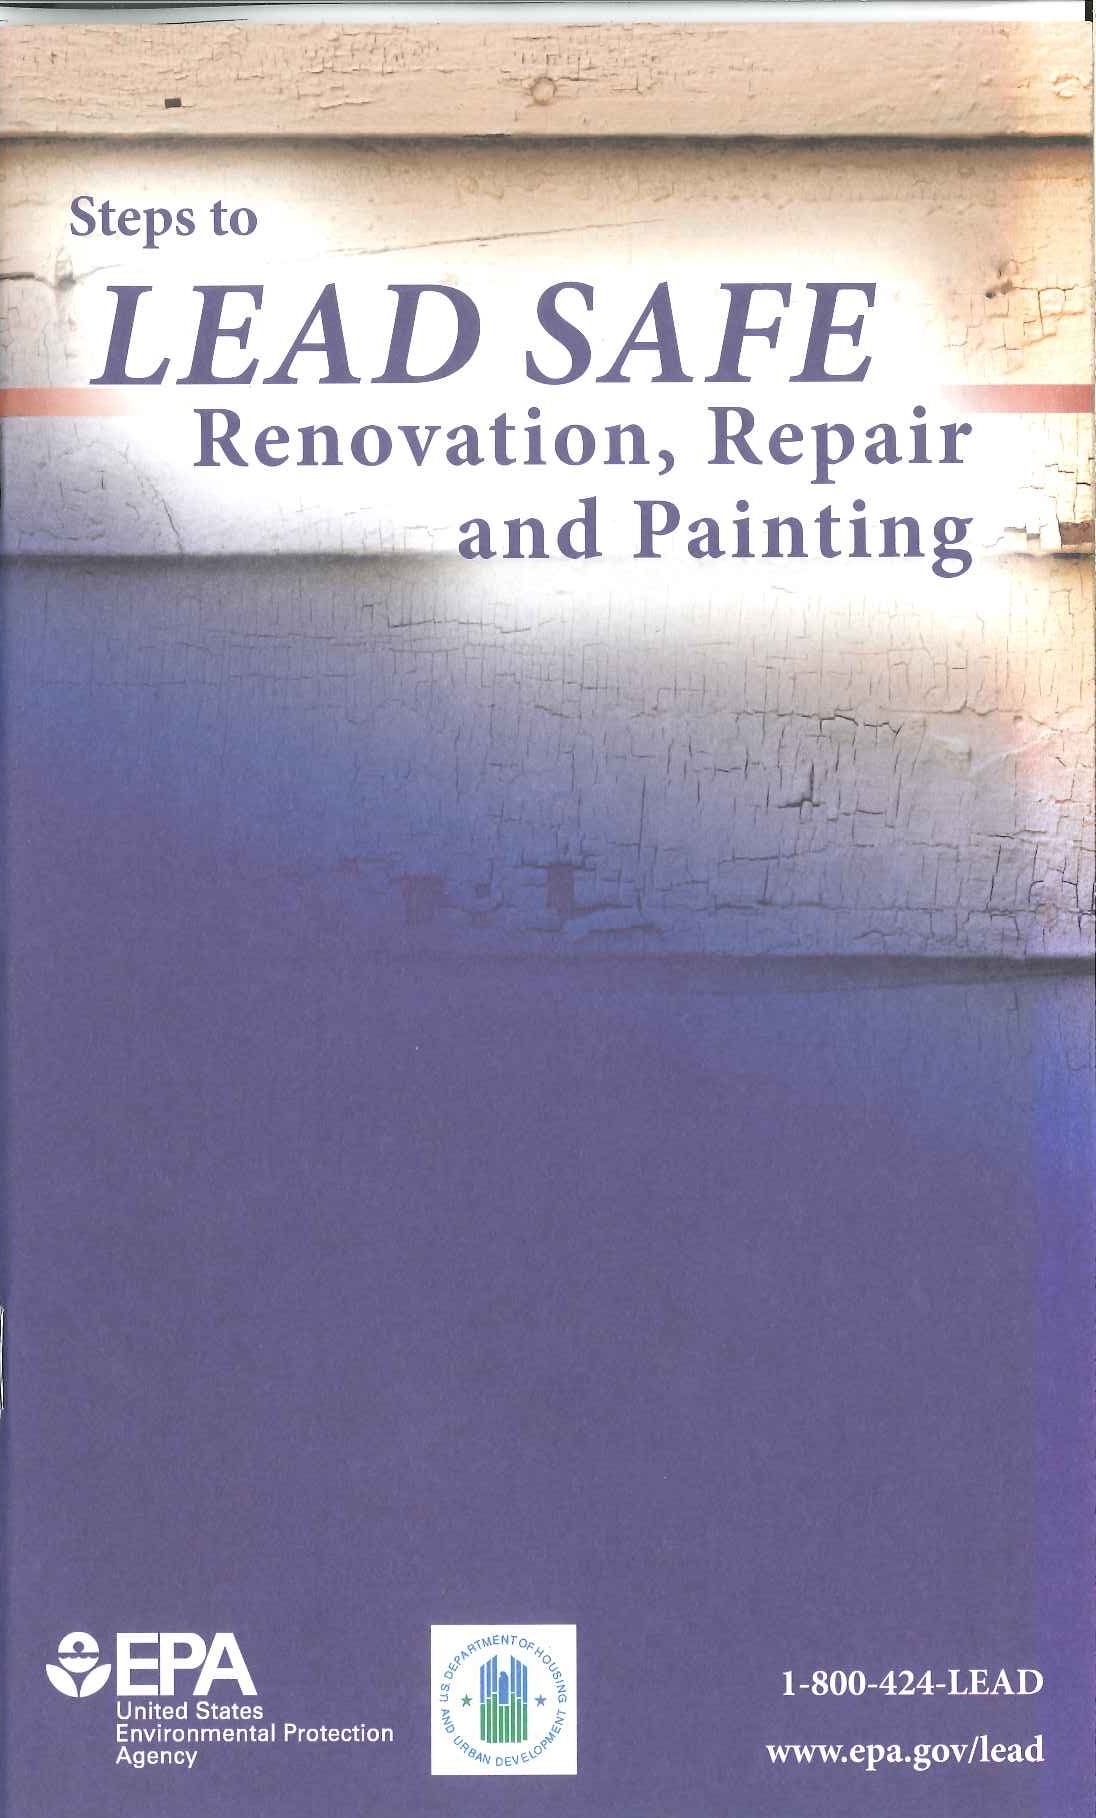  Lead Safe Renovation, Repair & Painting - English